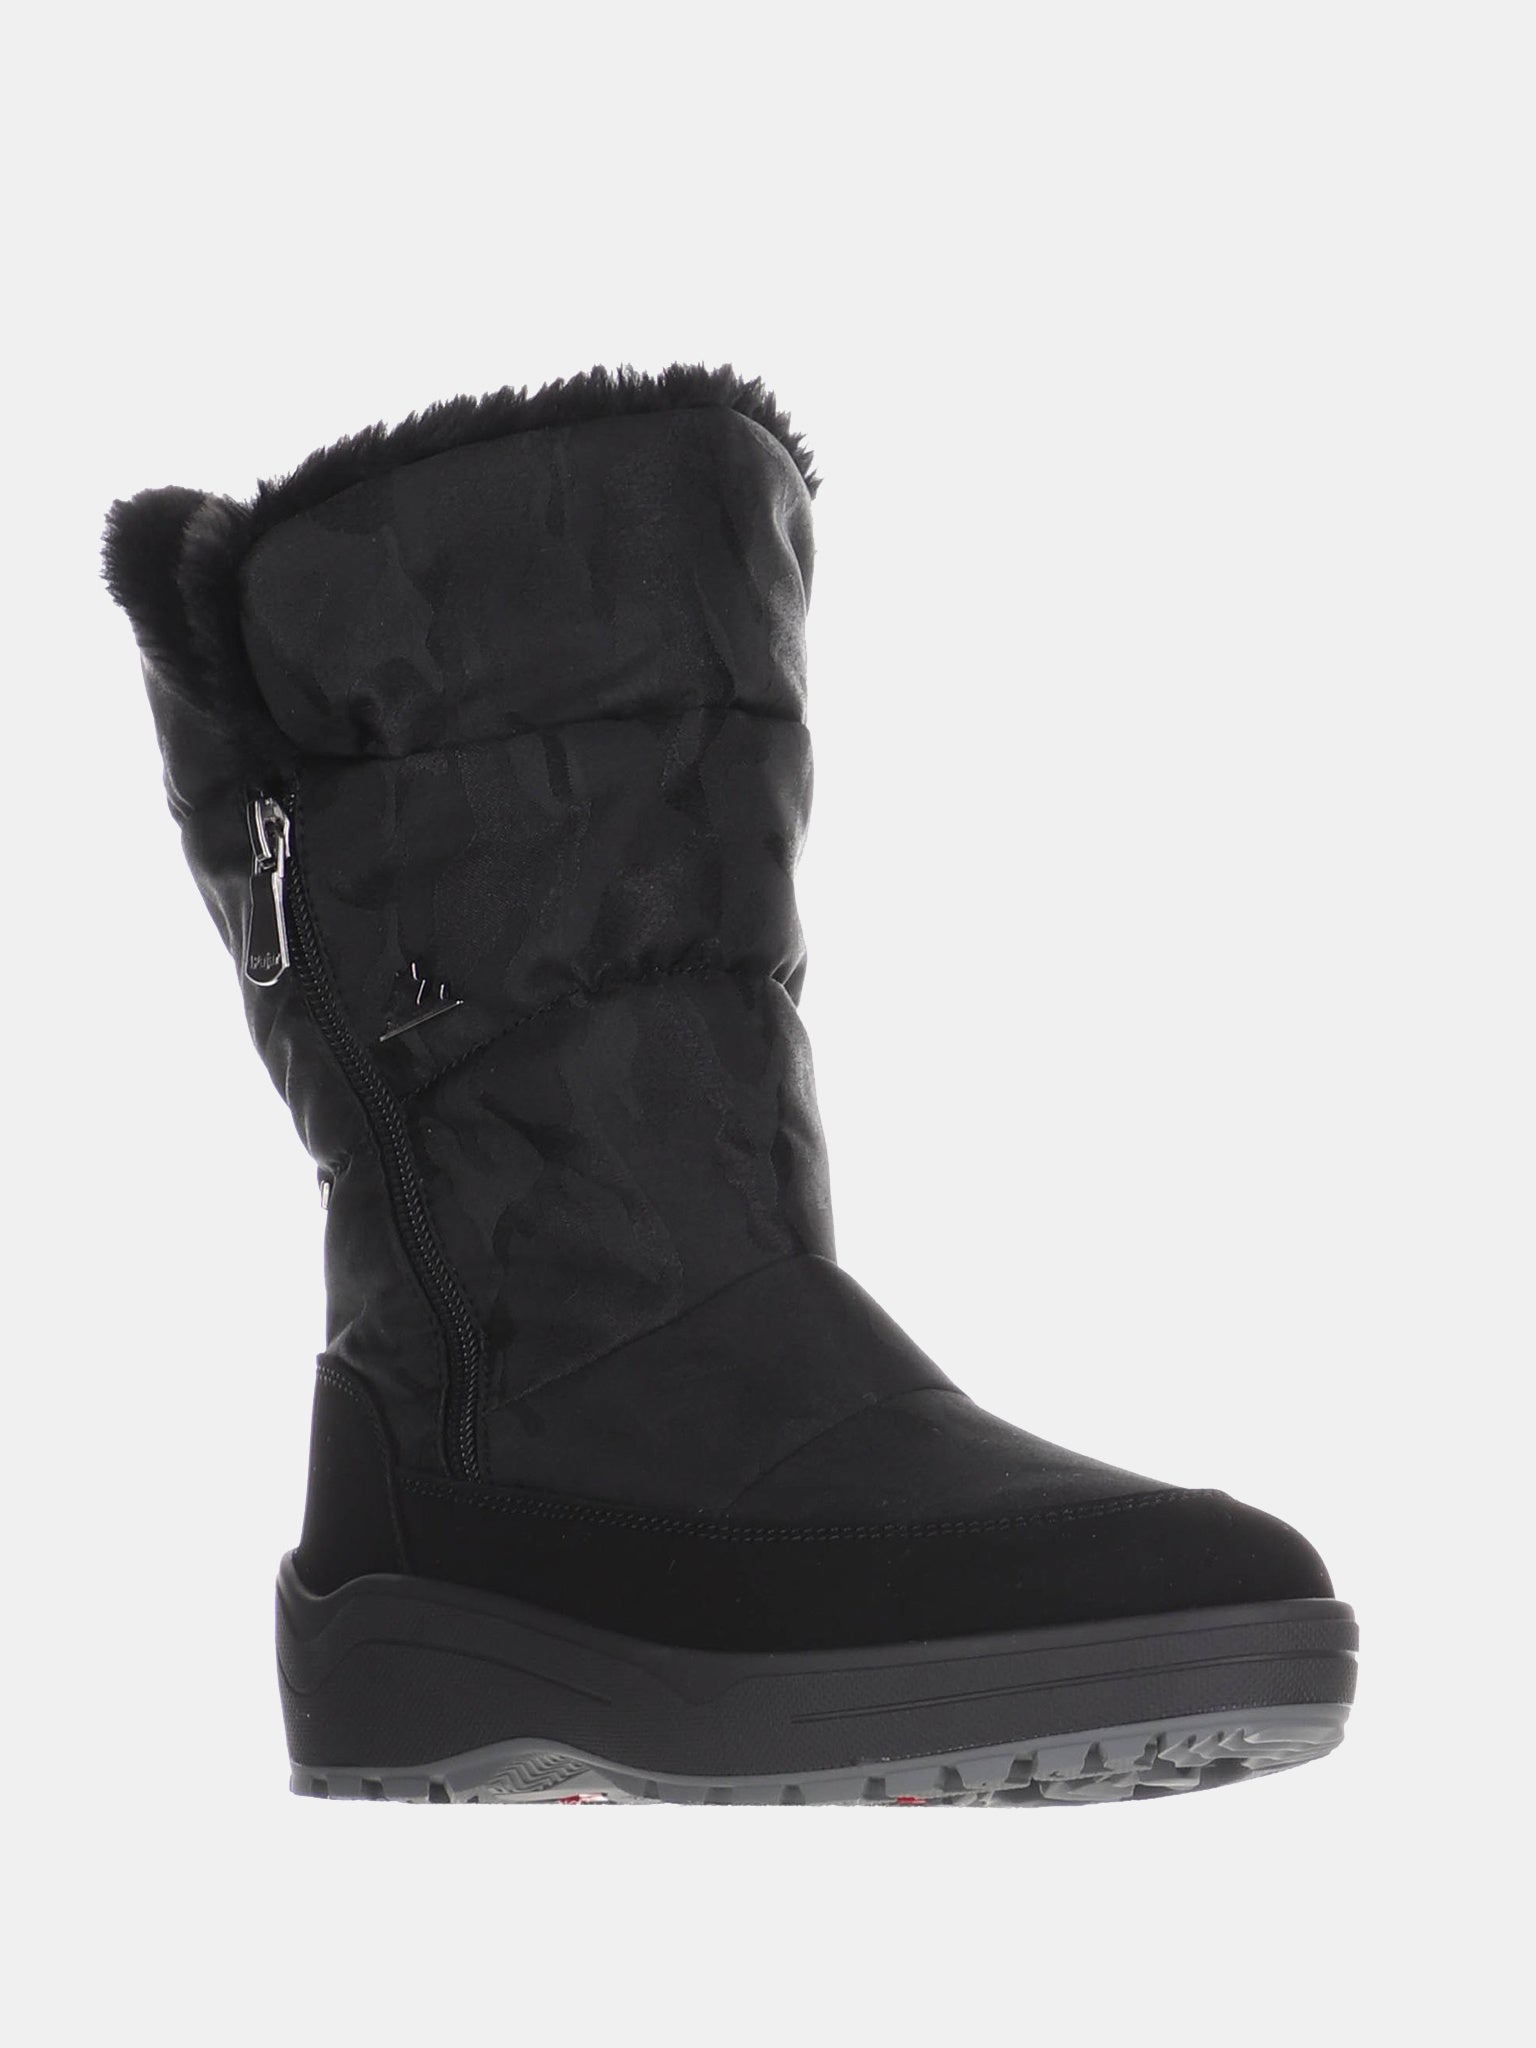 pajar snow boots